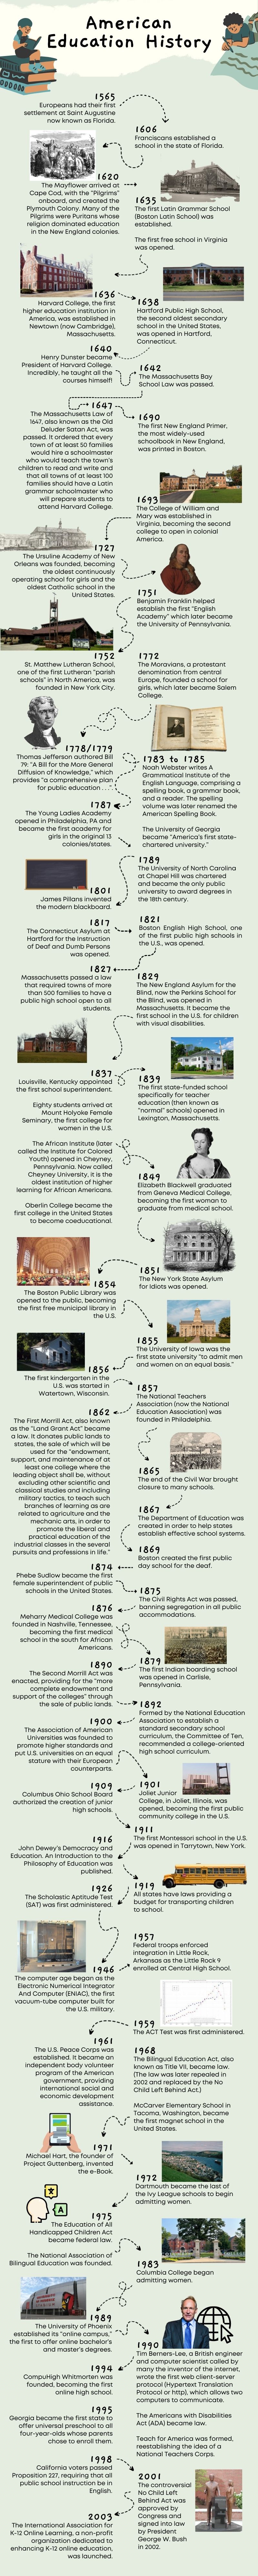 American Education History